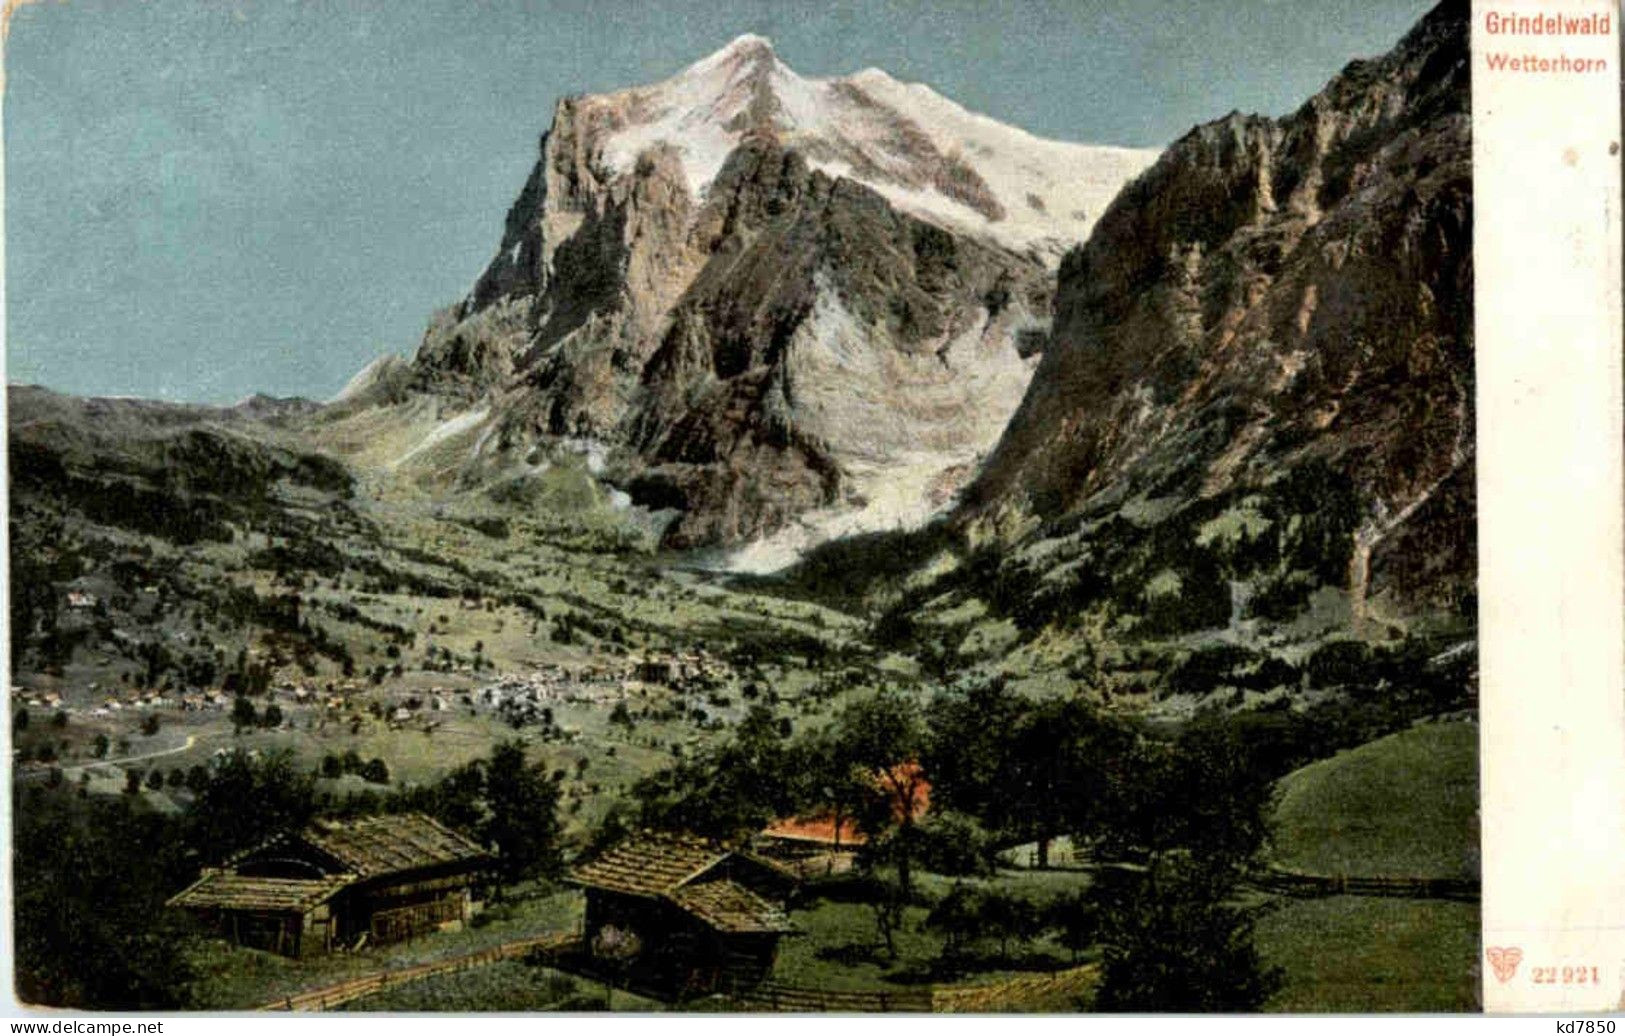 Grindelwald - Wetterhorn - Grindelwald